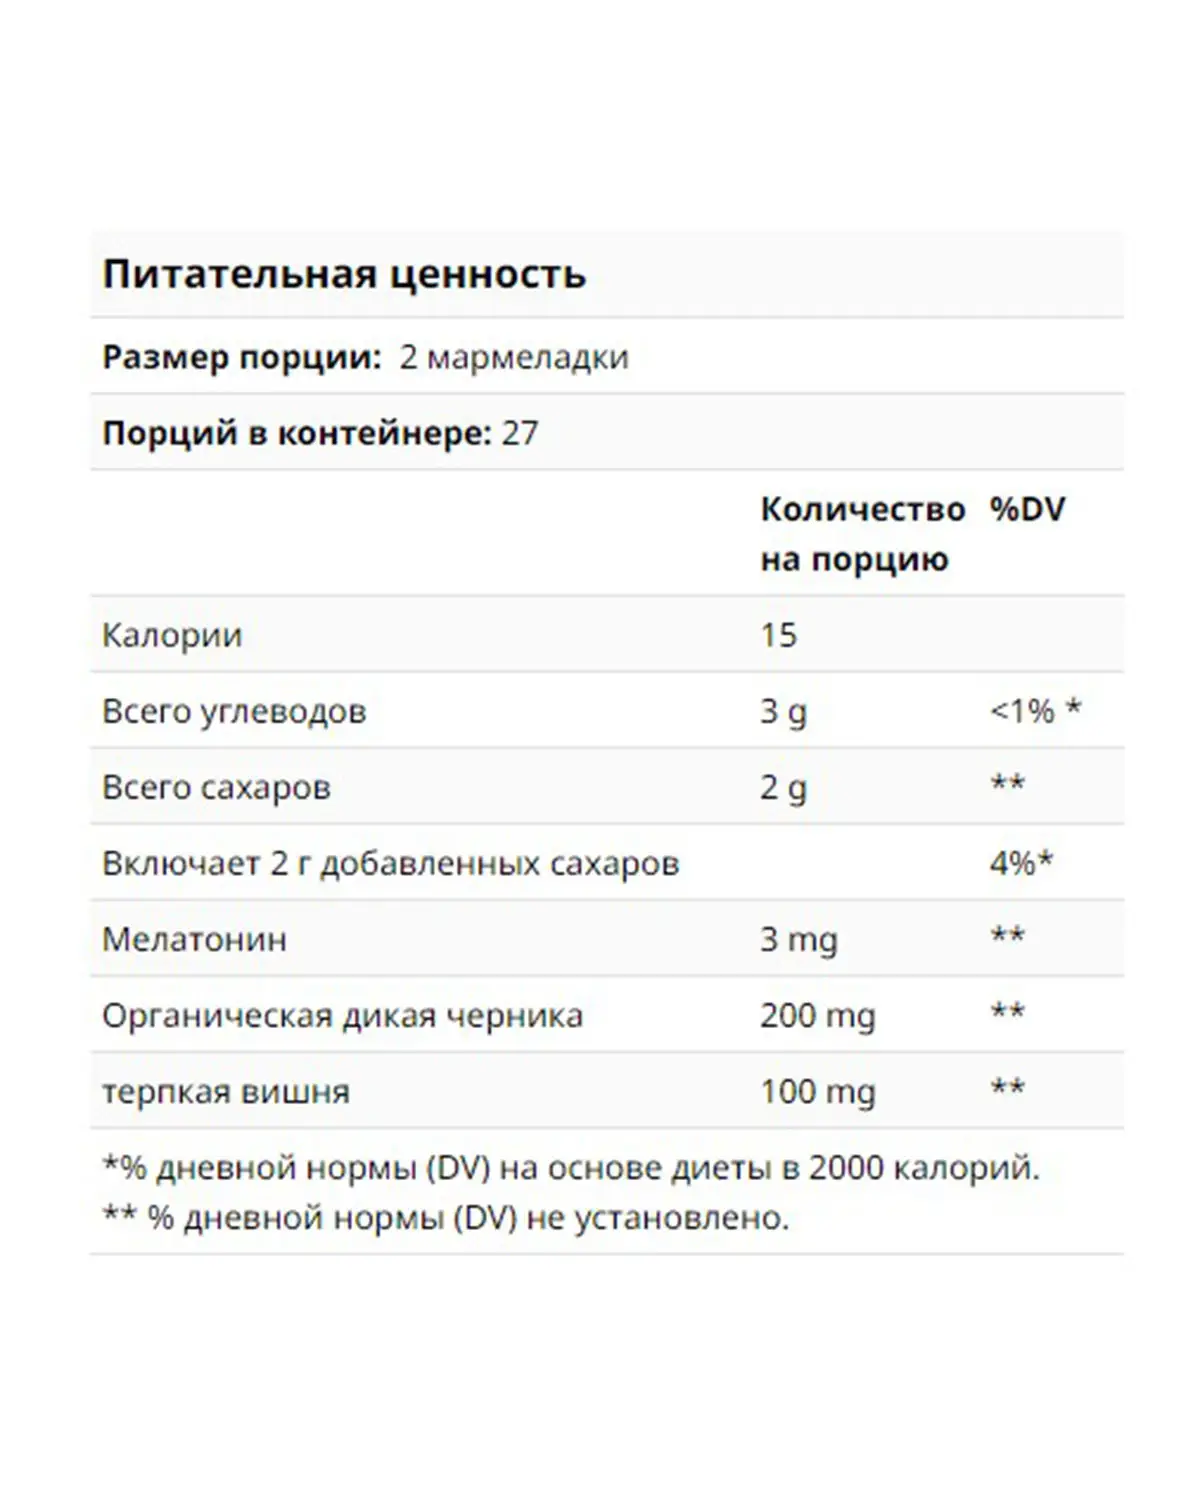 Мелатонин вкус ягод 1,5 мг | 54 жев конфеты MegaFood